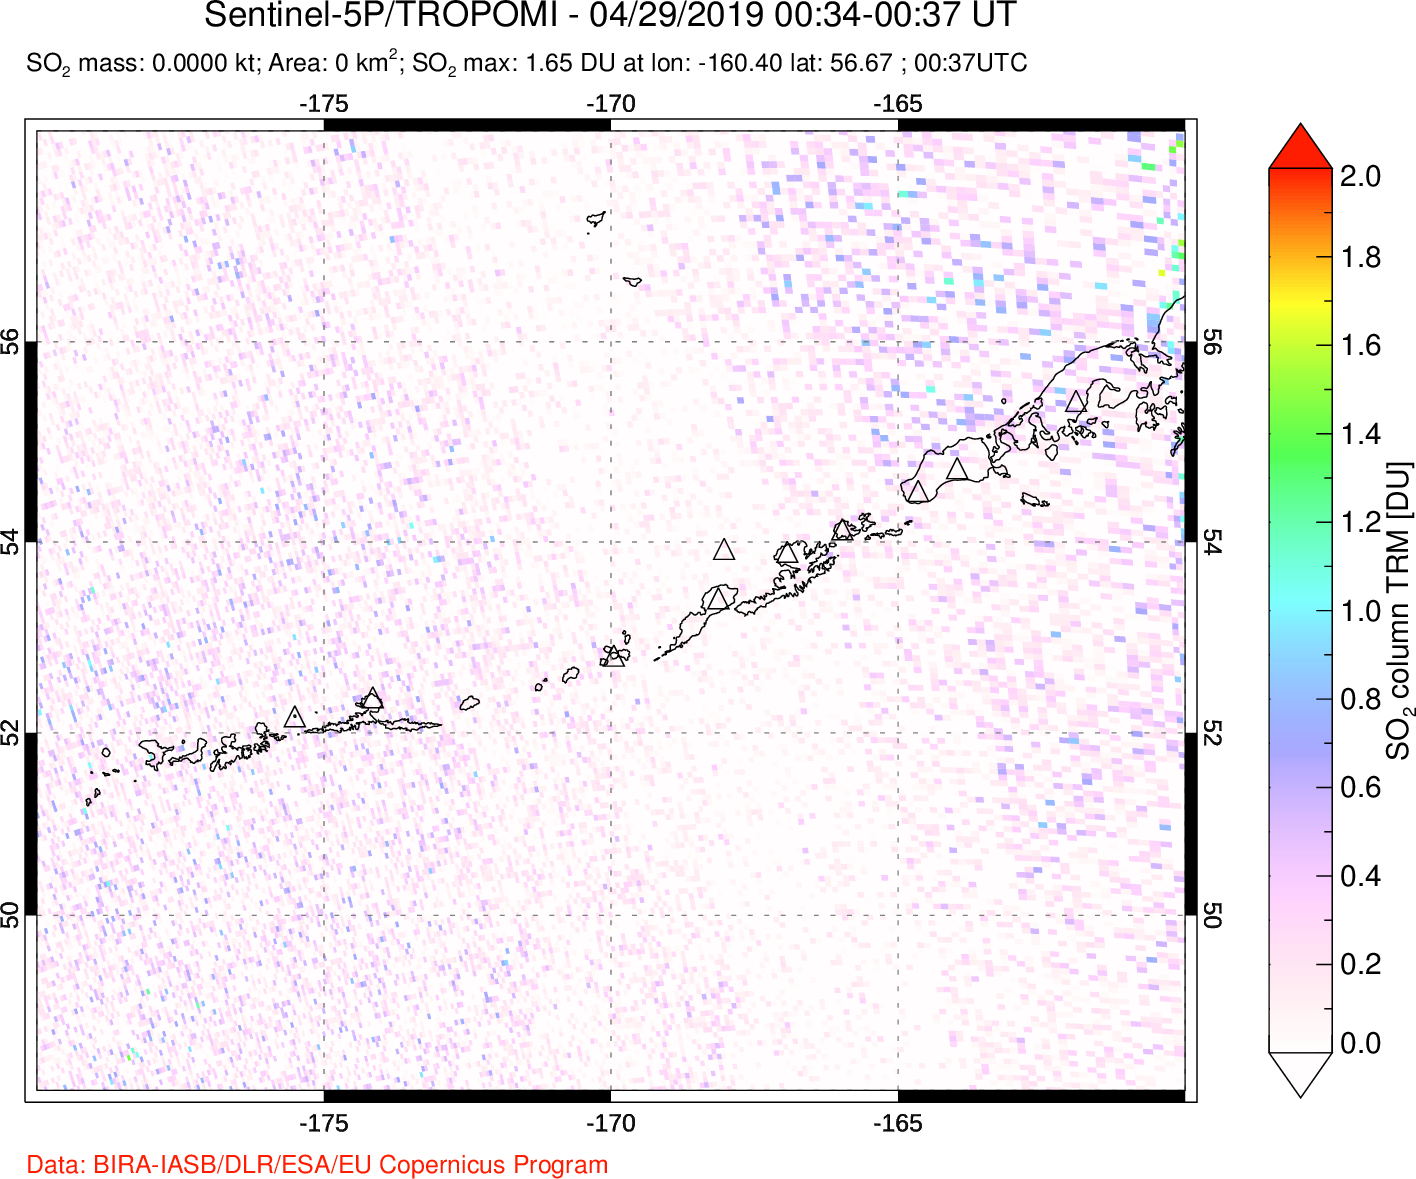 A sulfur dioxide image over Aleutian Islands, Alaska, USA on Apr 29, 2019.